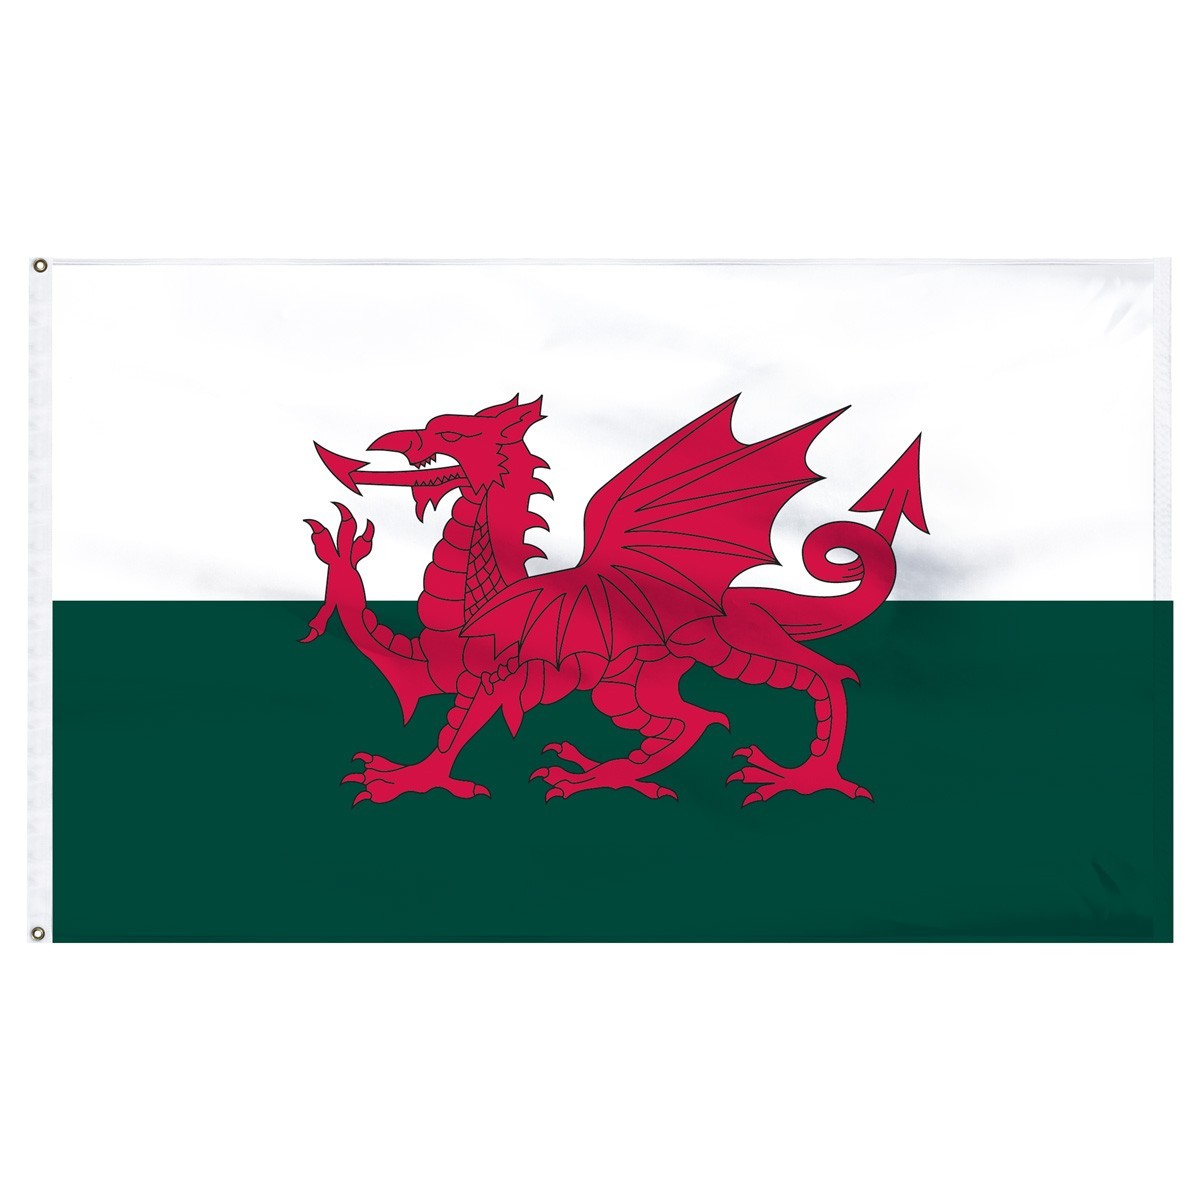 Wales 2' x 3' Outdoor Nylon Flag